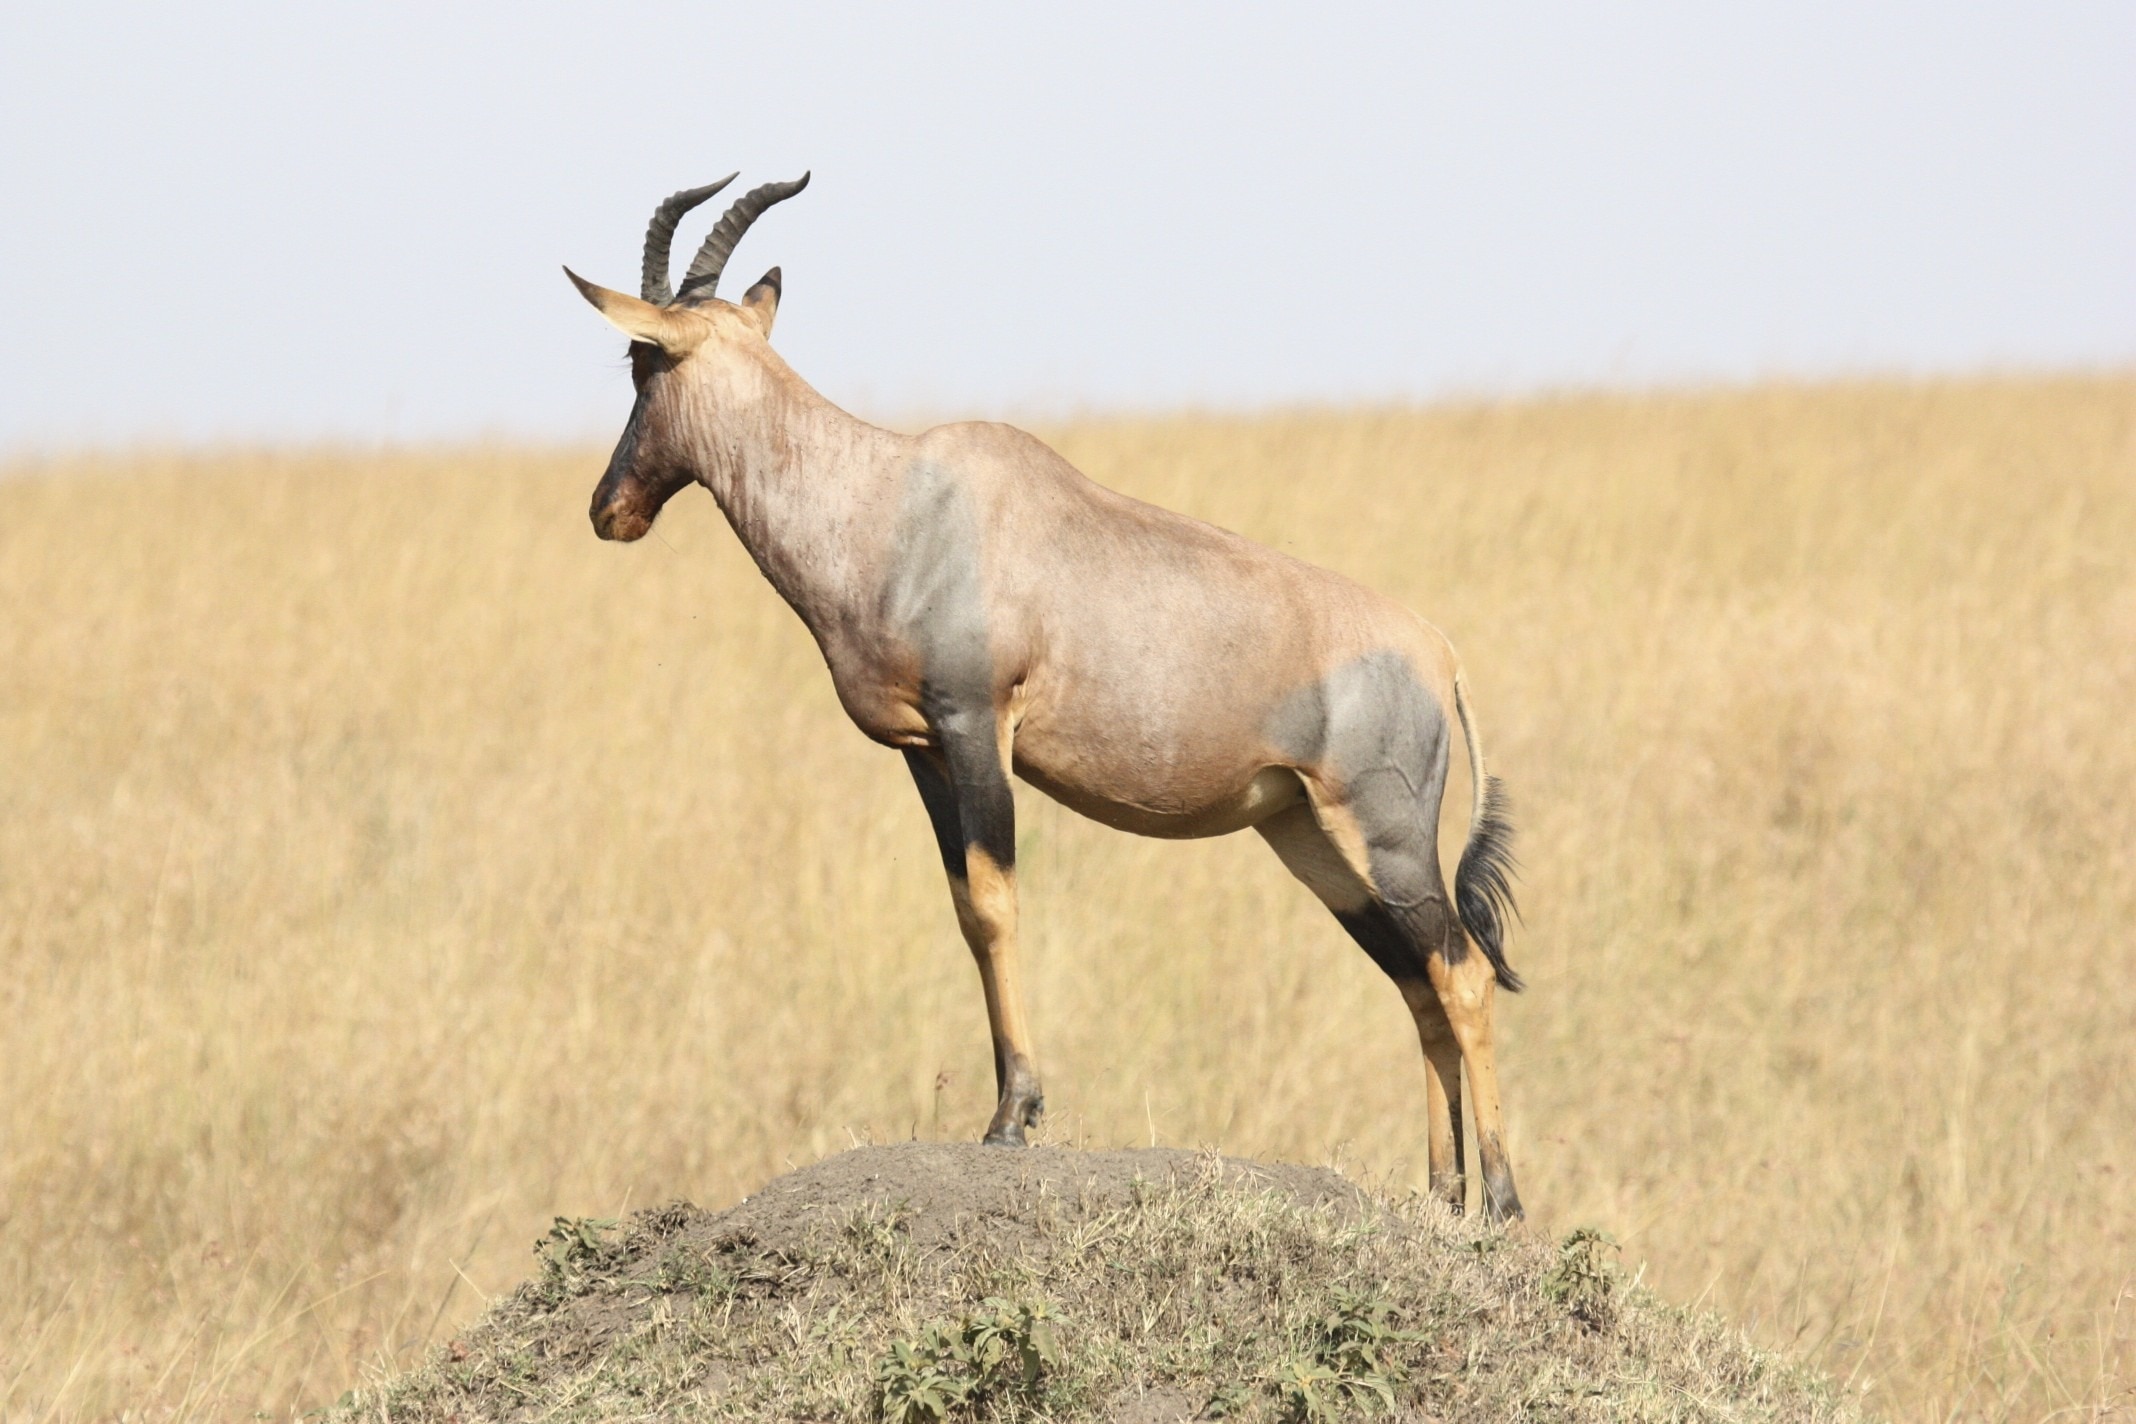 South Africa, Tanzania, Antelope, Africa, animal wildlife, animals in the wild